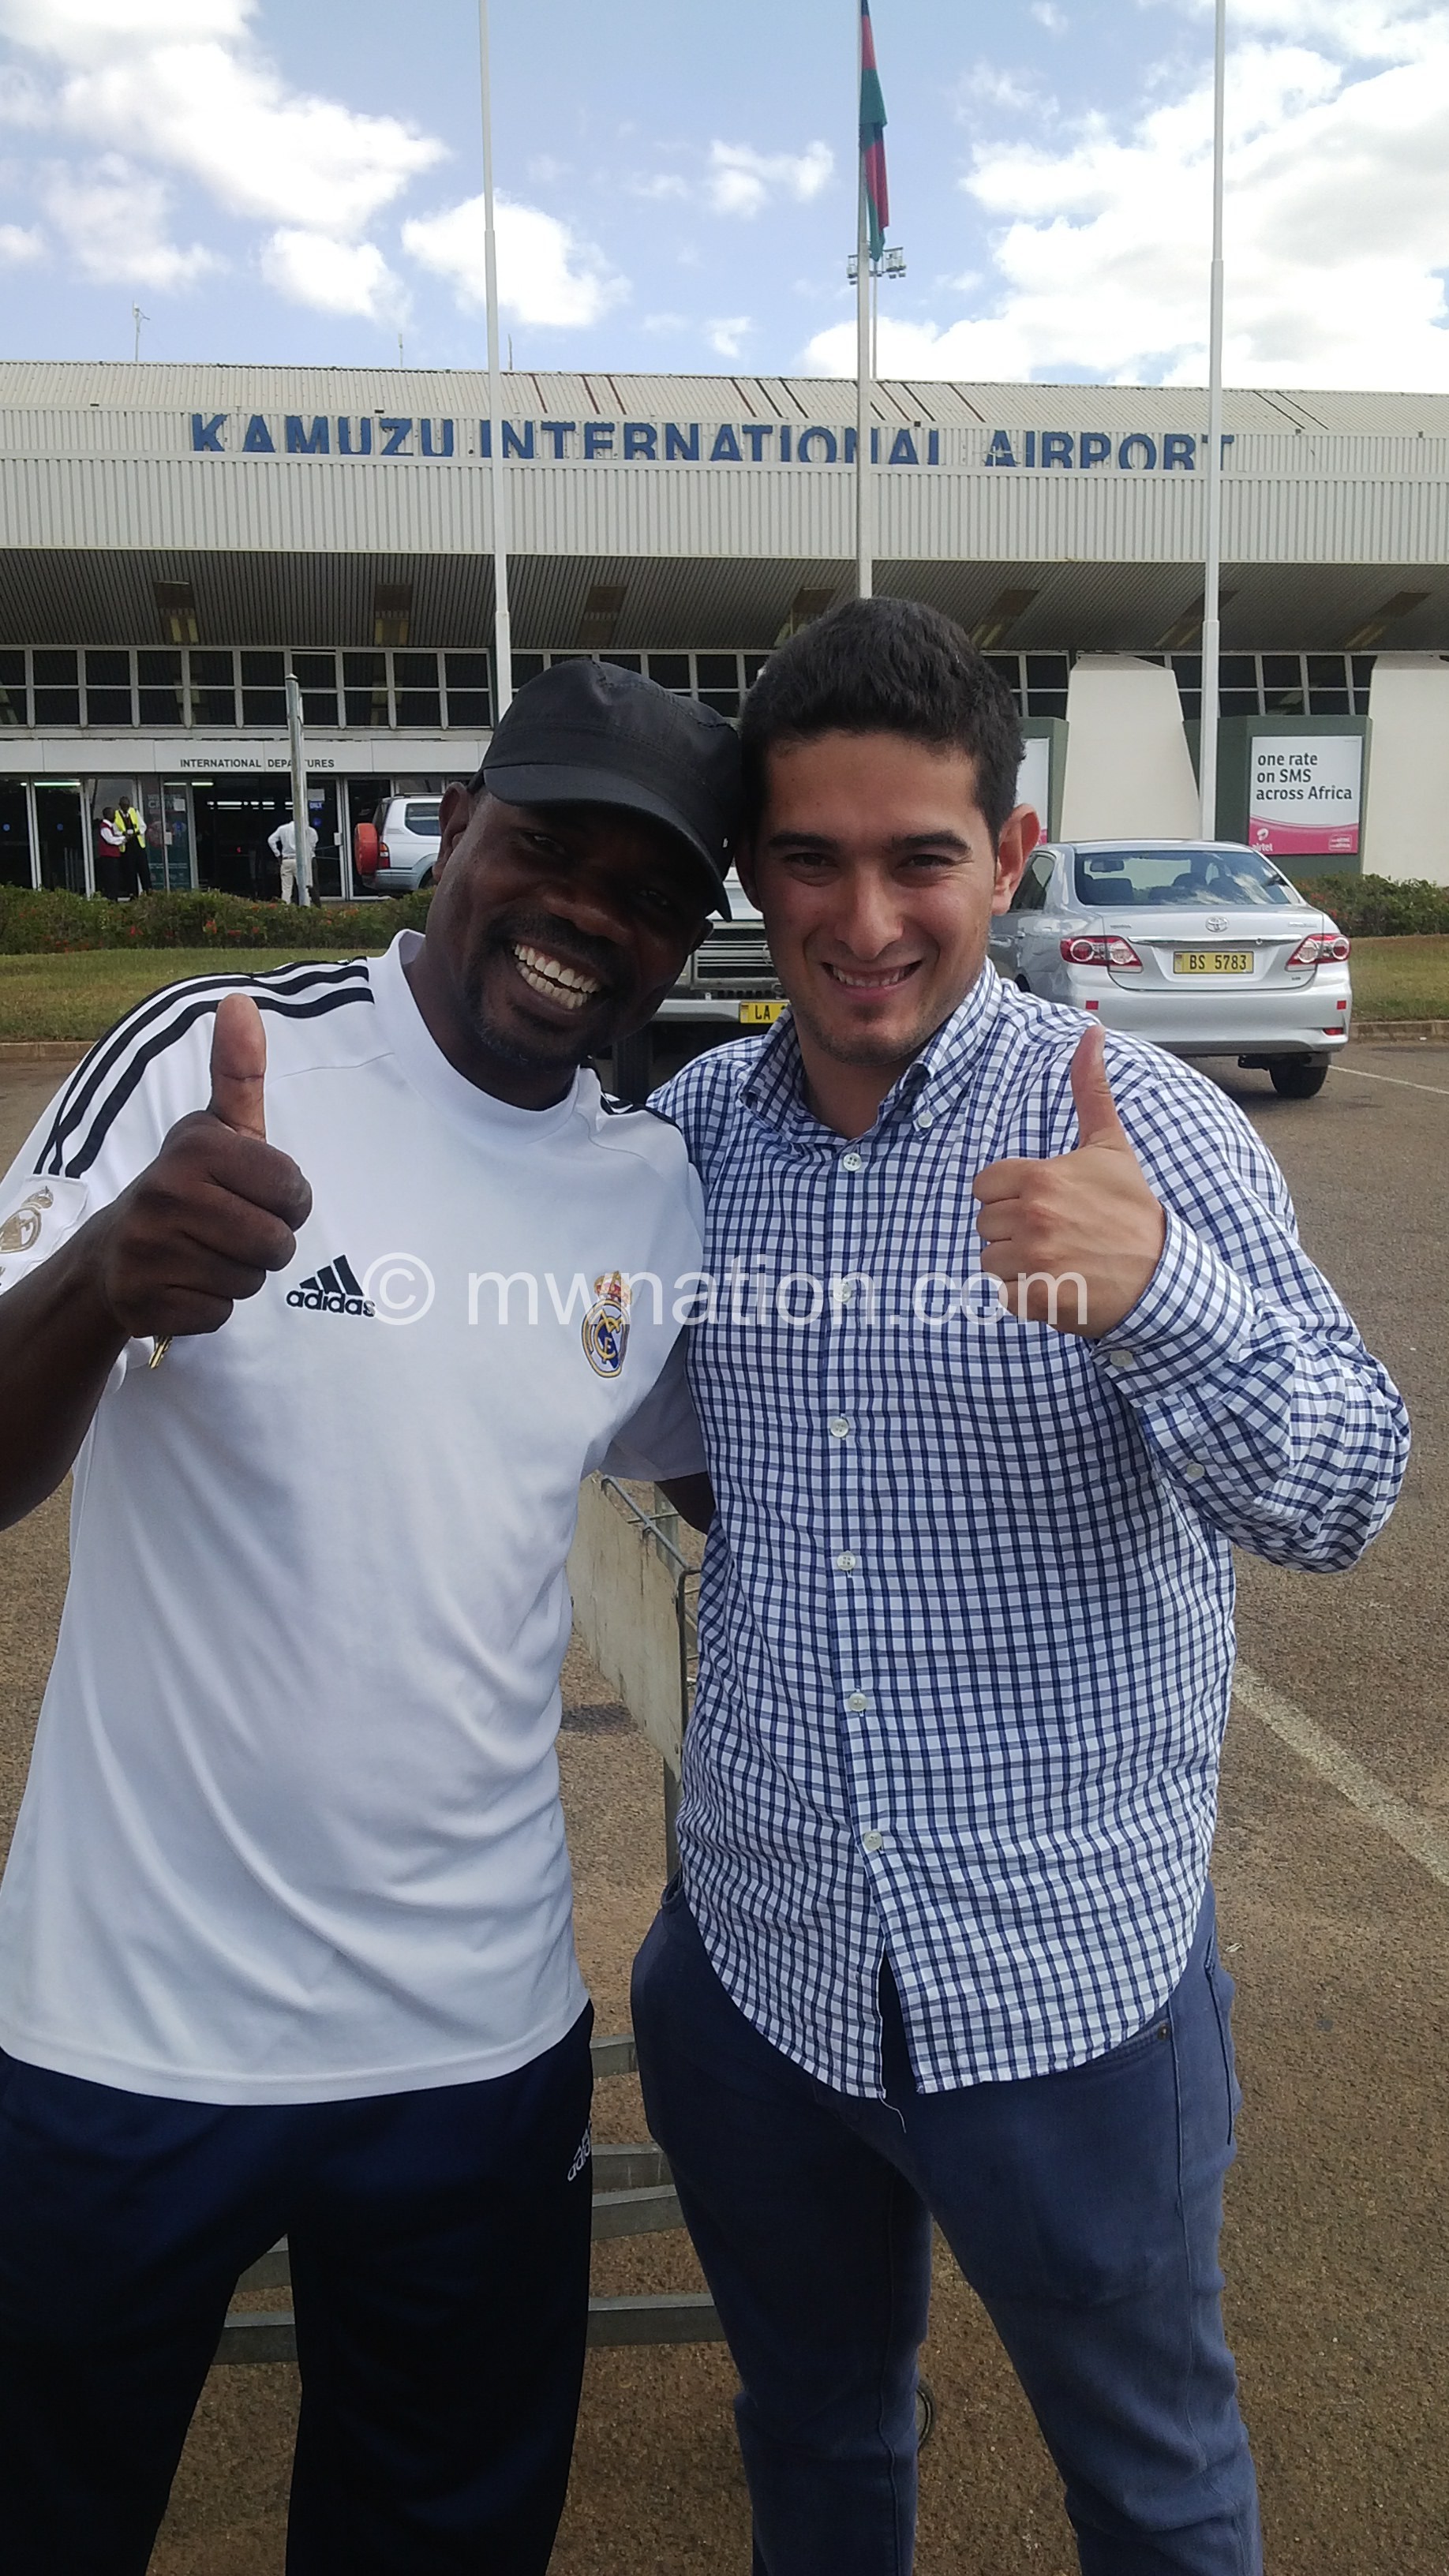 Vasquez (R) from Madrid being welcomed at Malawi's Kamuzu International Airport (KIA) by Msowoya